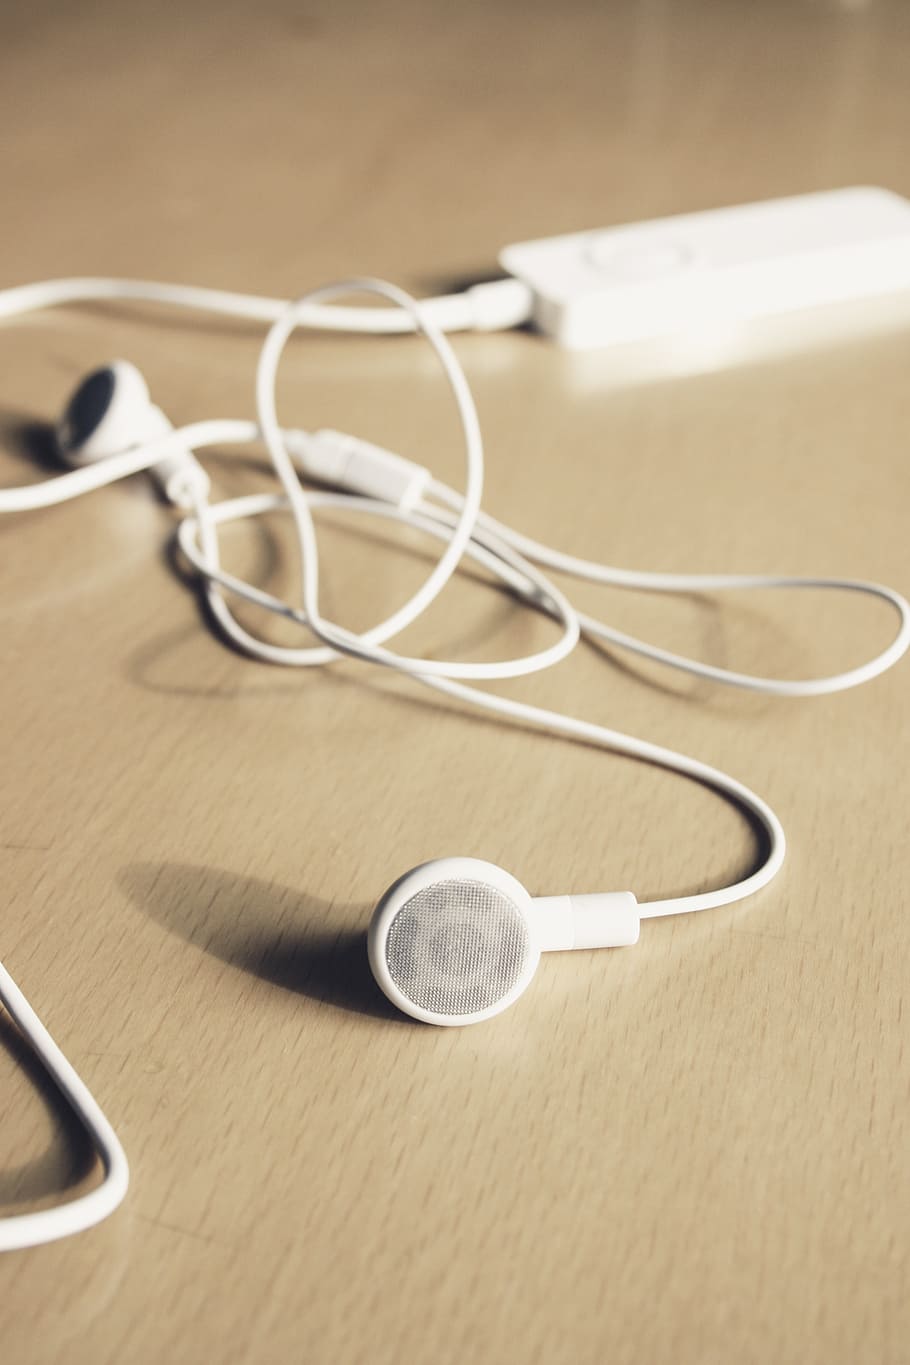 blanco, auriculares, marrón, superficie, ipod, música, escuchar, estéreo, audio, escuchar música